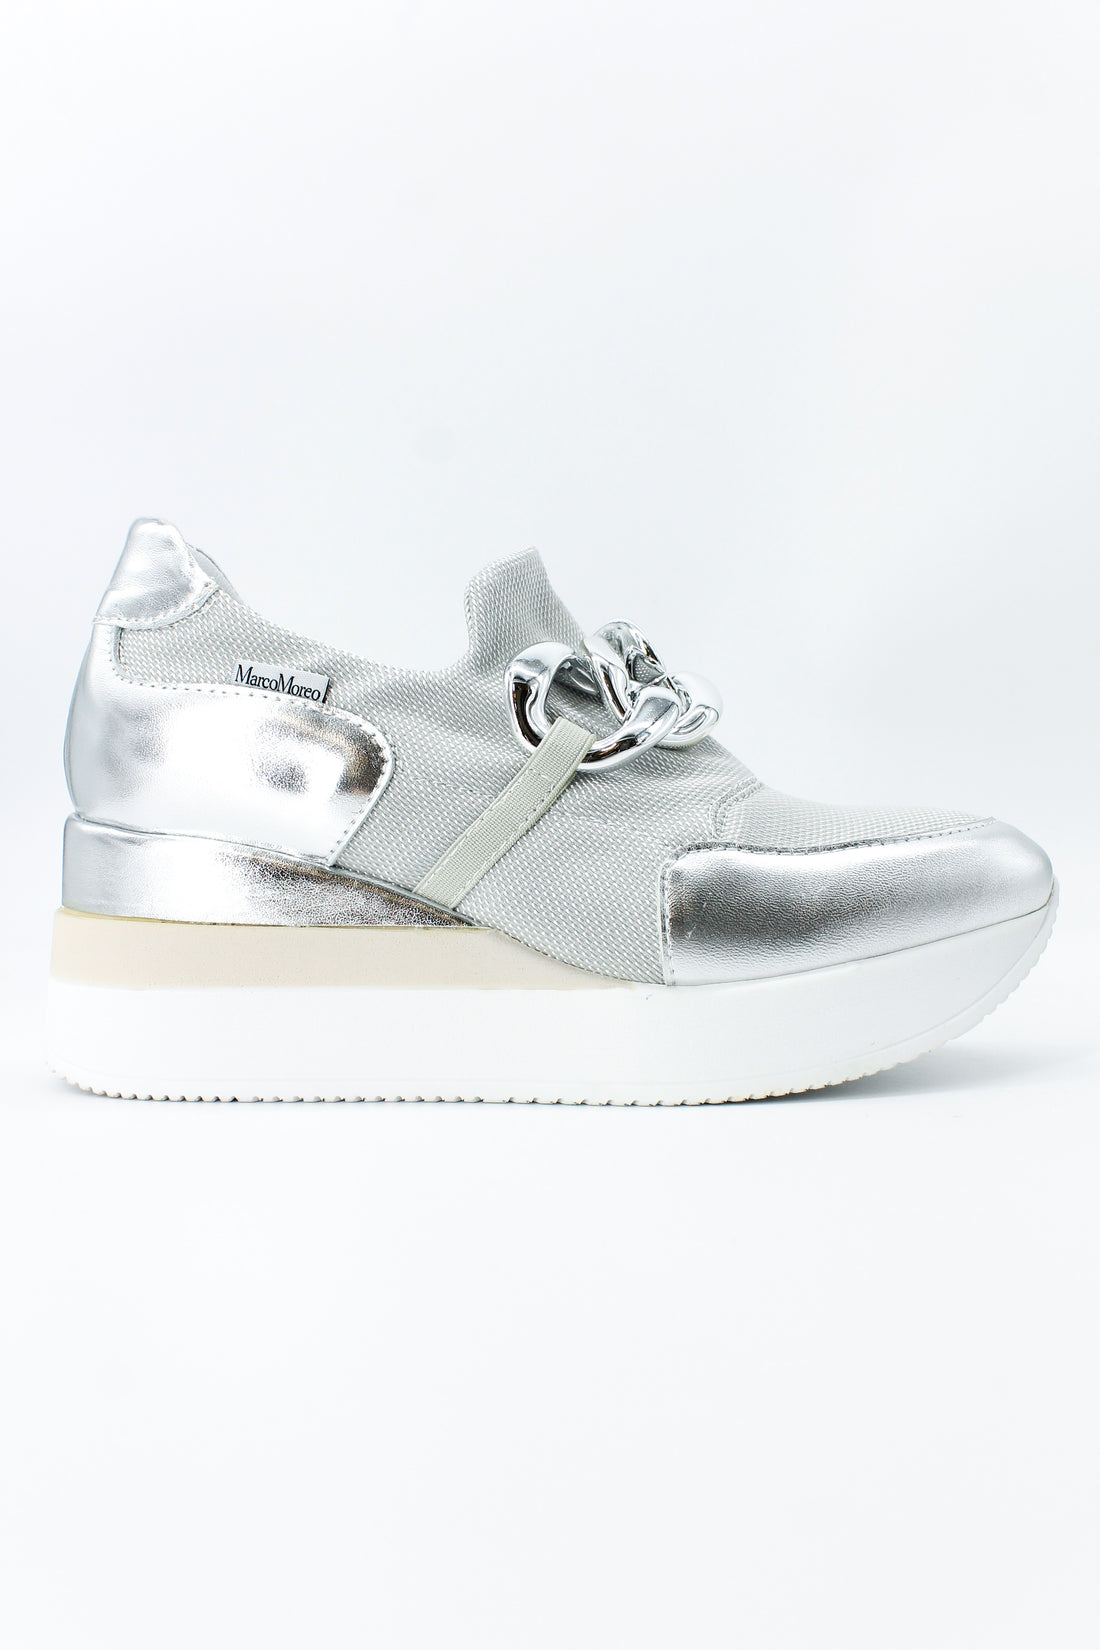 Marco Moreo 3011 Silver – Shoe Style International